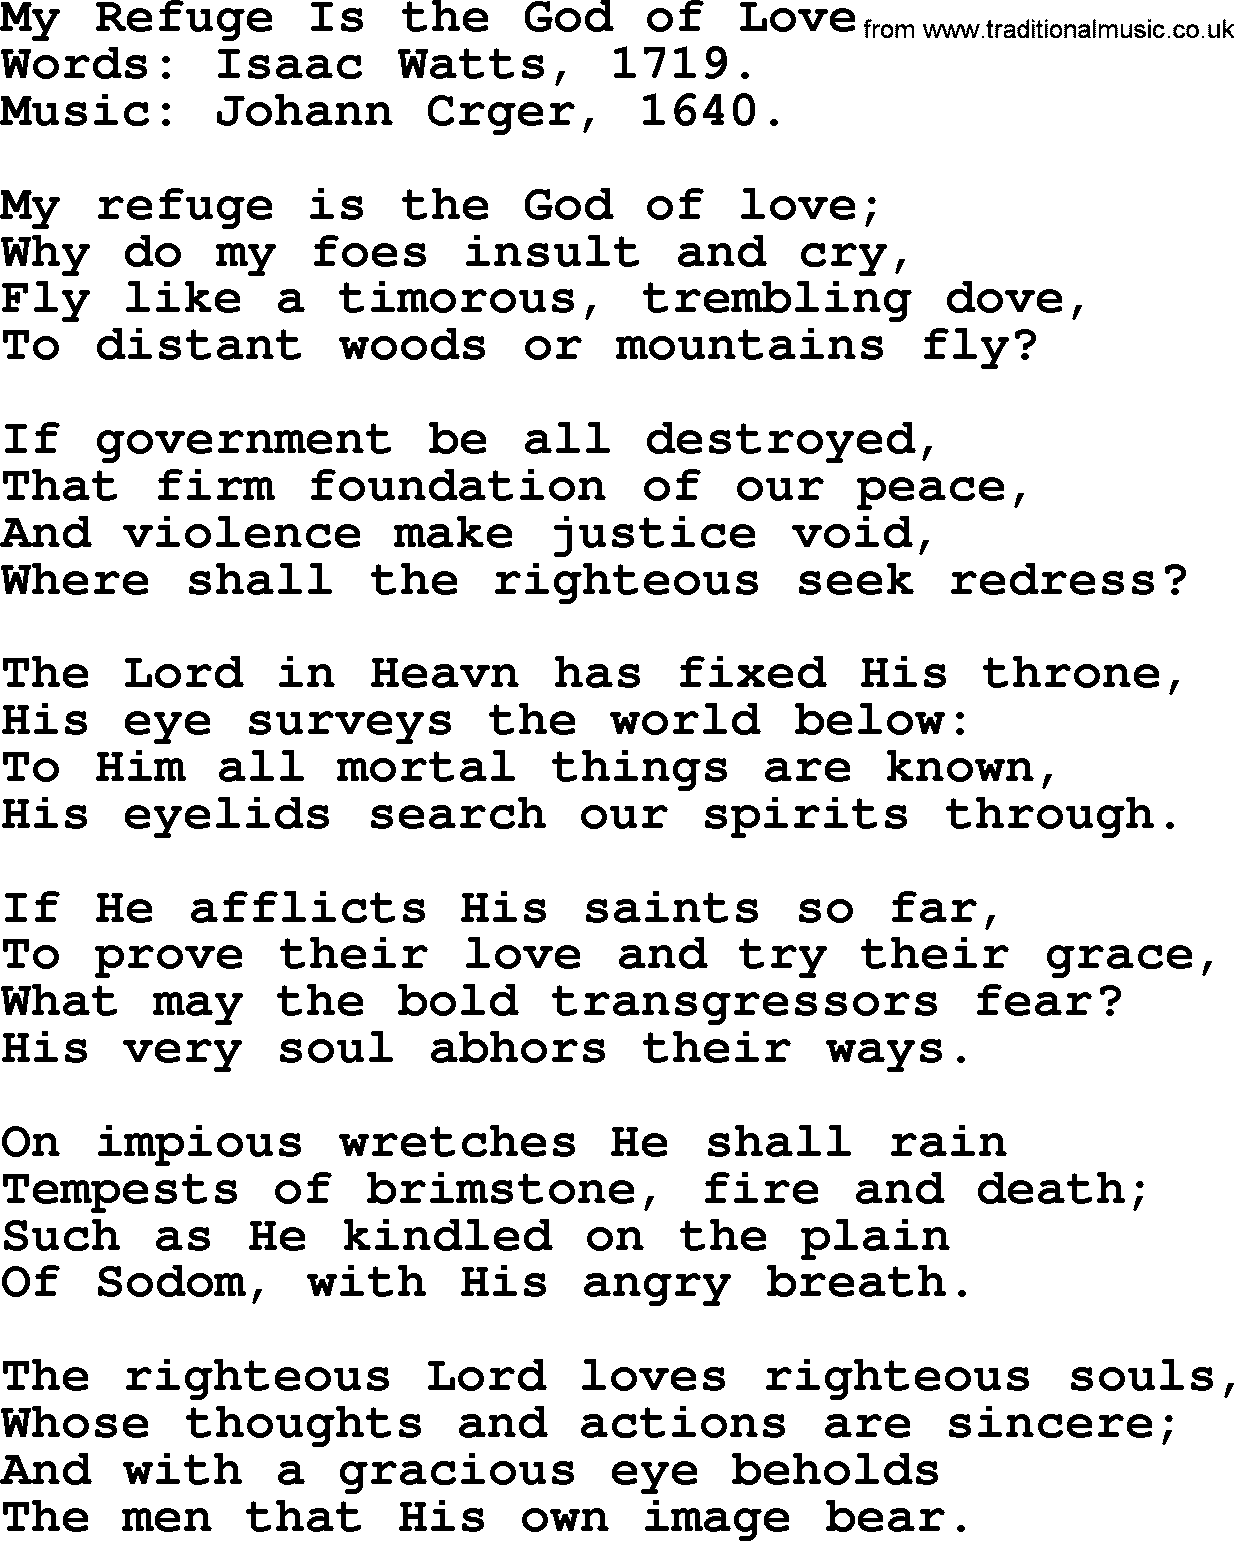 Isaac Watts Christian hymn: My Refuge Is the God of Love- lyricss